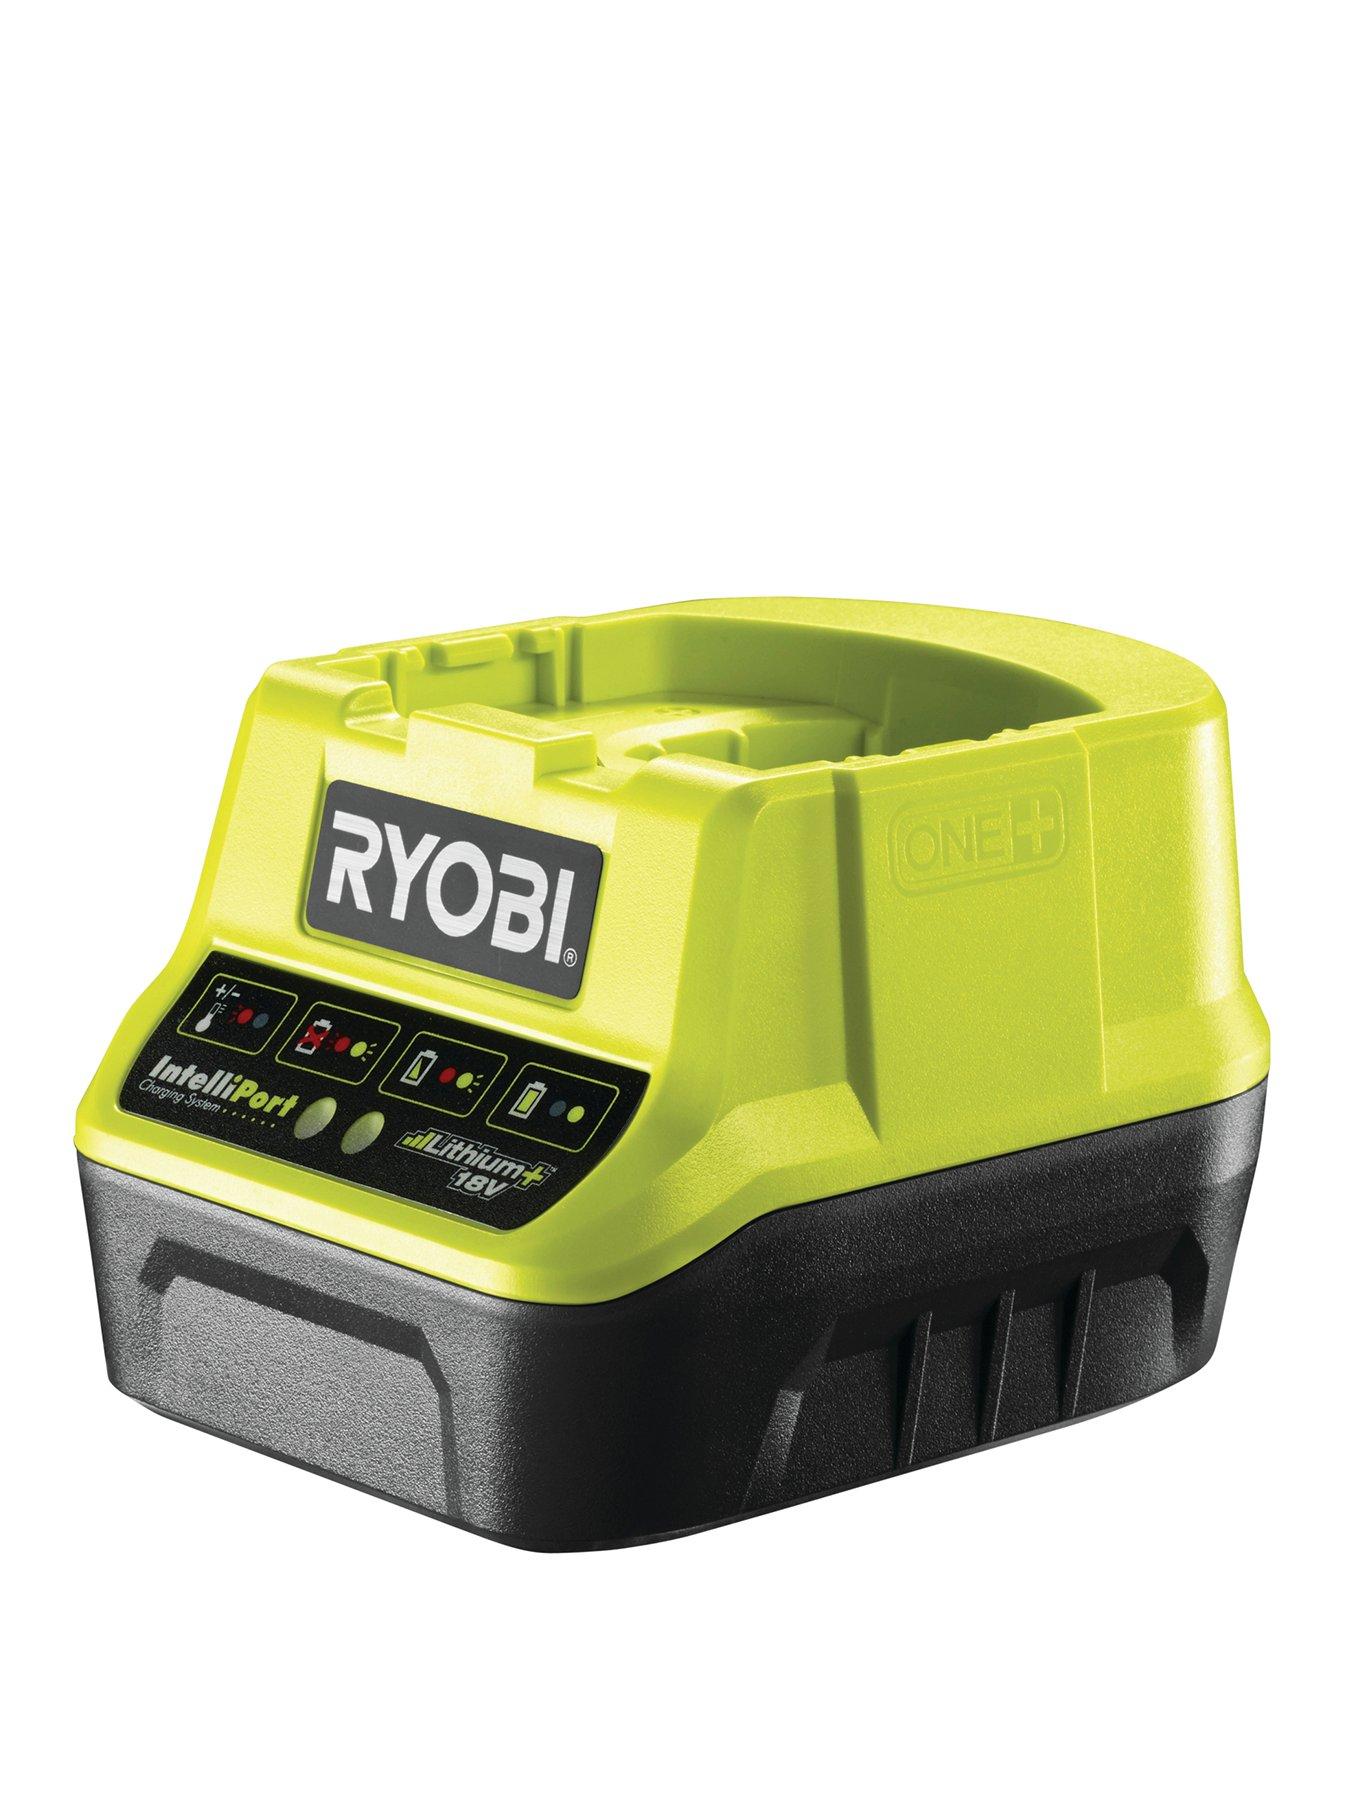 Ryobi - Pack RC18120-125 Chargeur et batterie Lithium+ 18V 2.5Ah One+ Ryobi